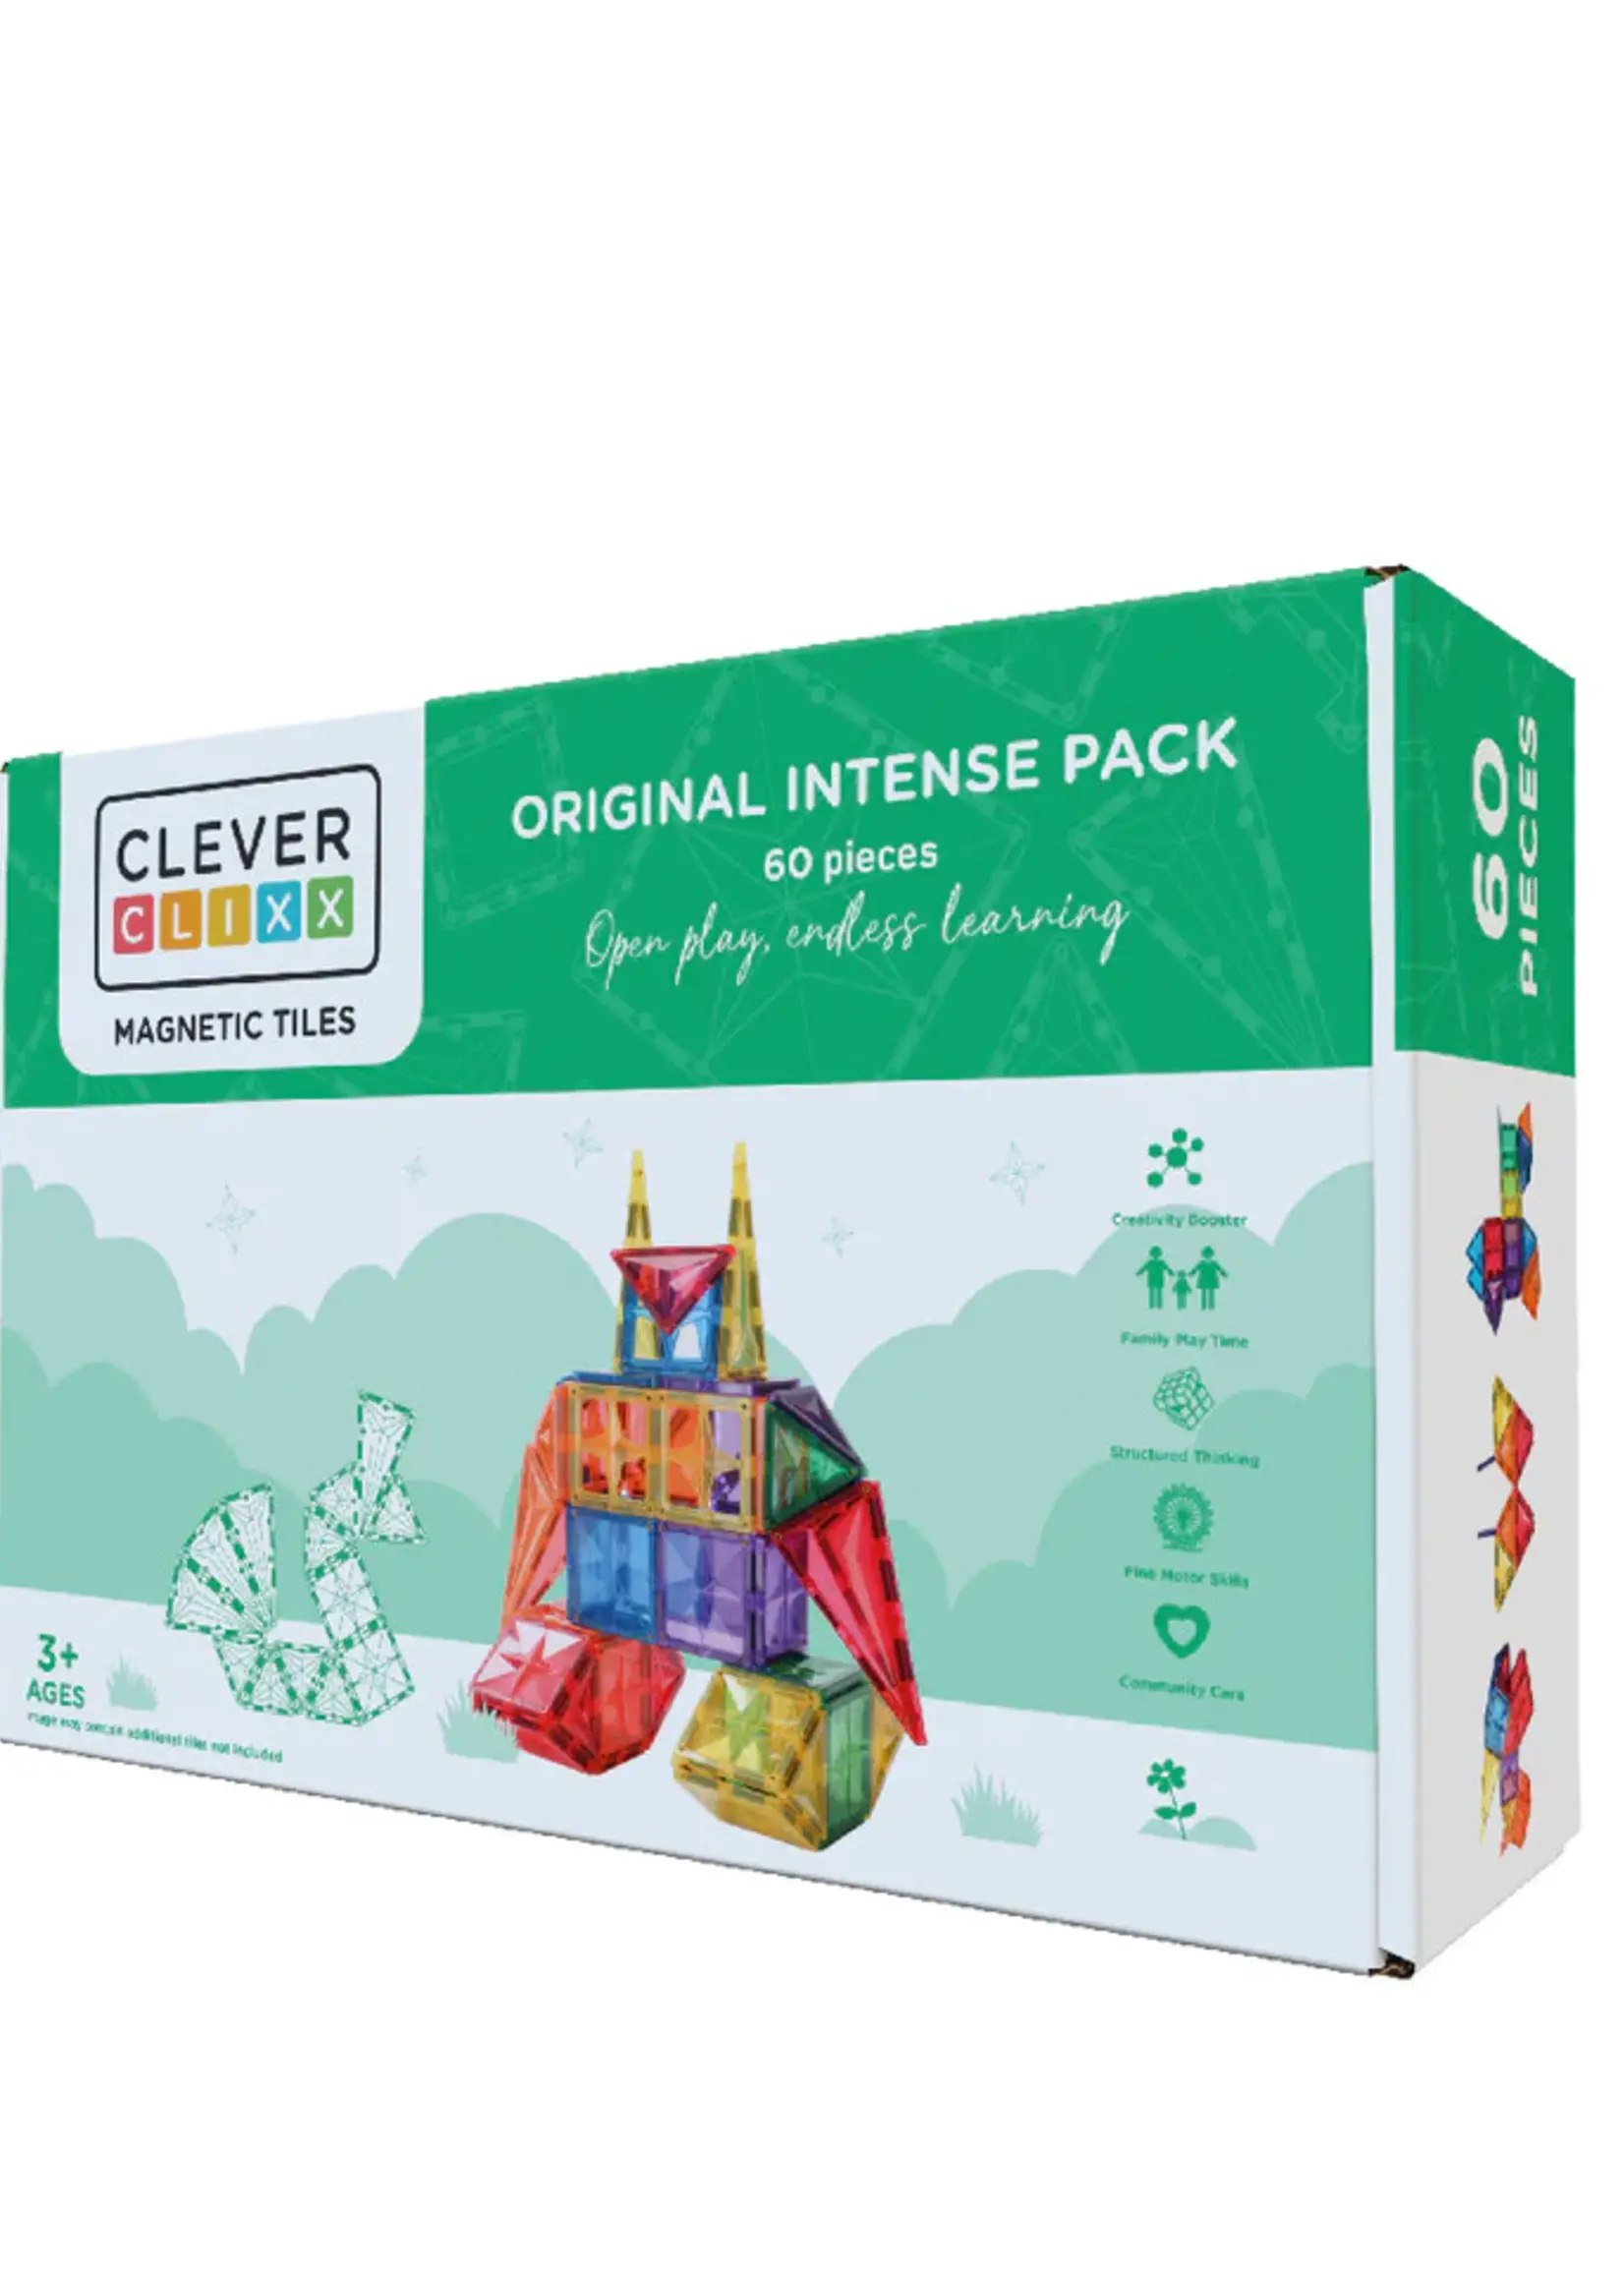 Cleverclixx Cleverclixx | Original Intense Pack - 60 pieces